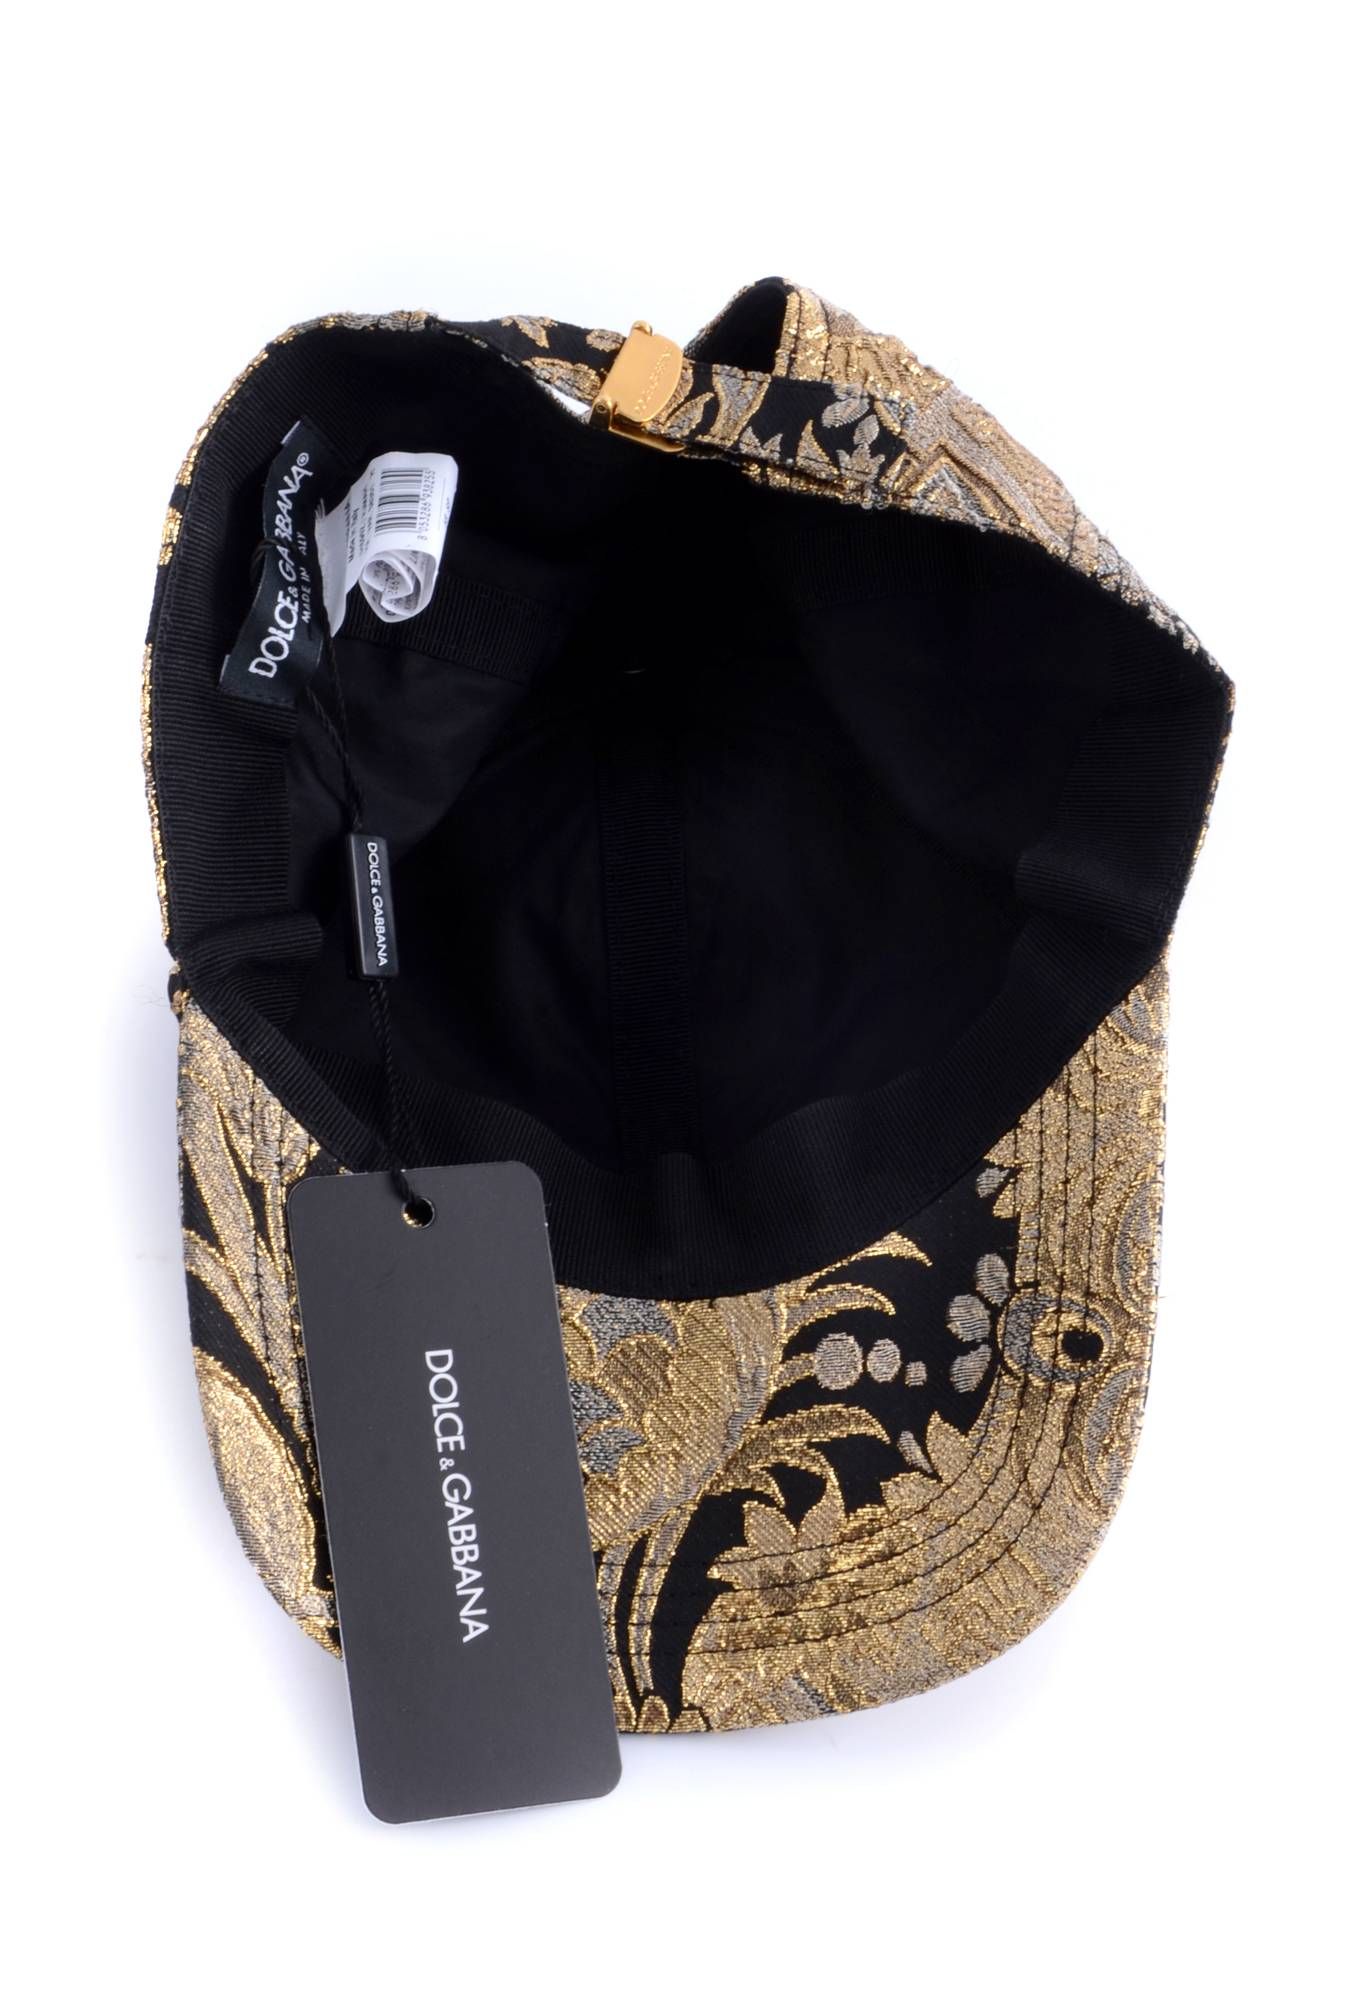 Dolce & Gabbana Men Embroidered Baseball Cap
IH590Z HJMAH
38% Polyamide, 32% Acetate, 16% Silk, 14% ME